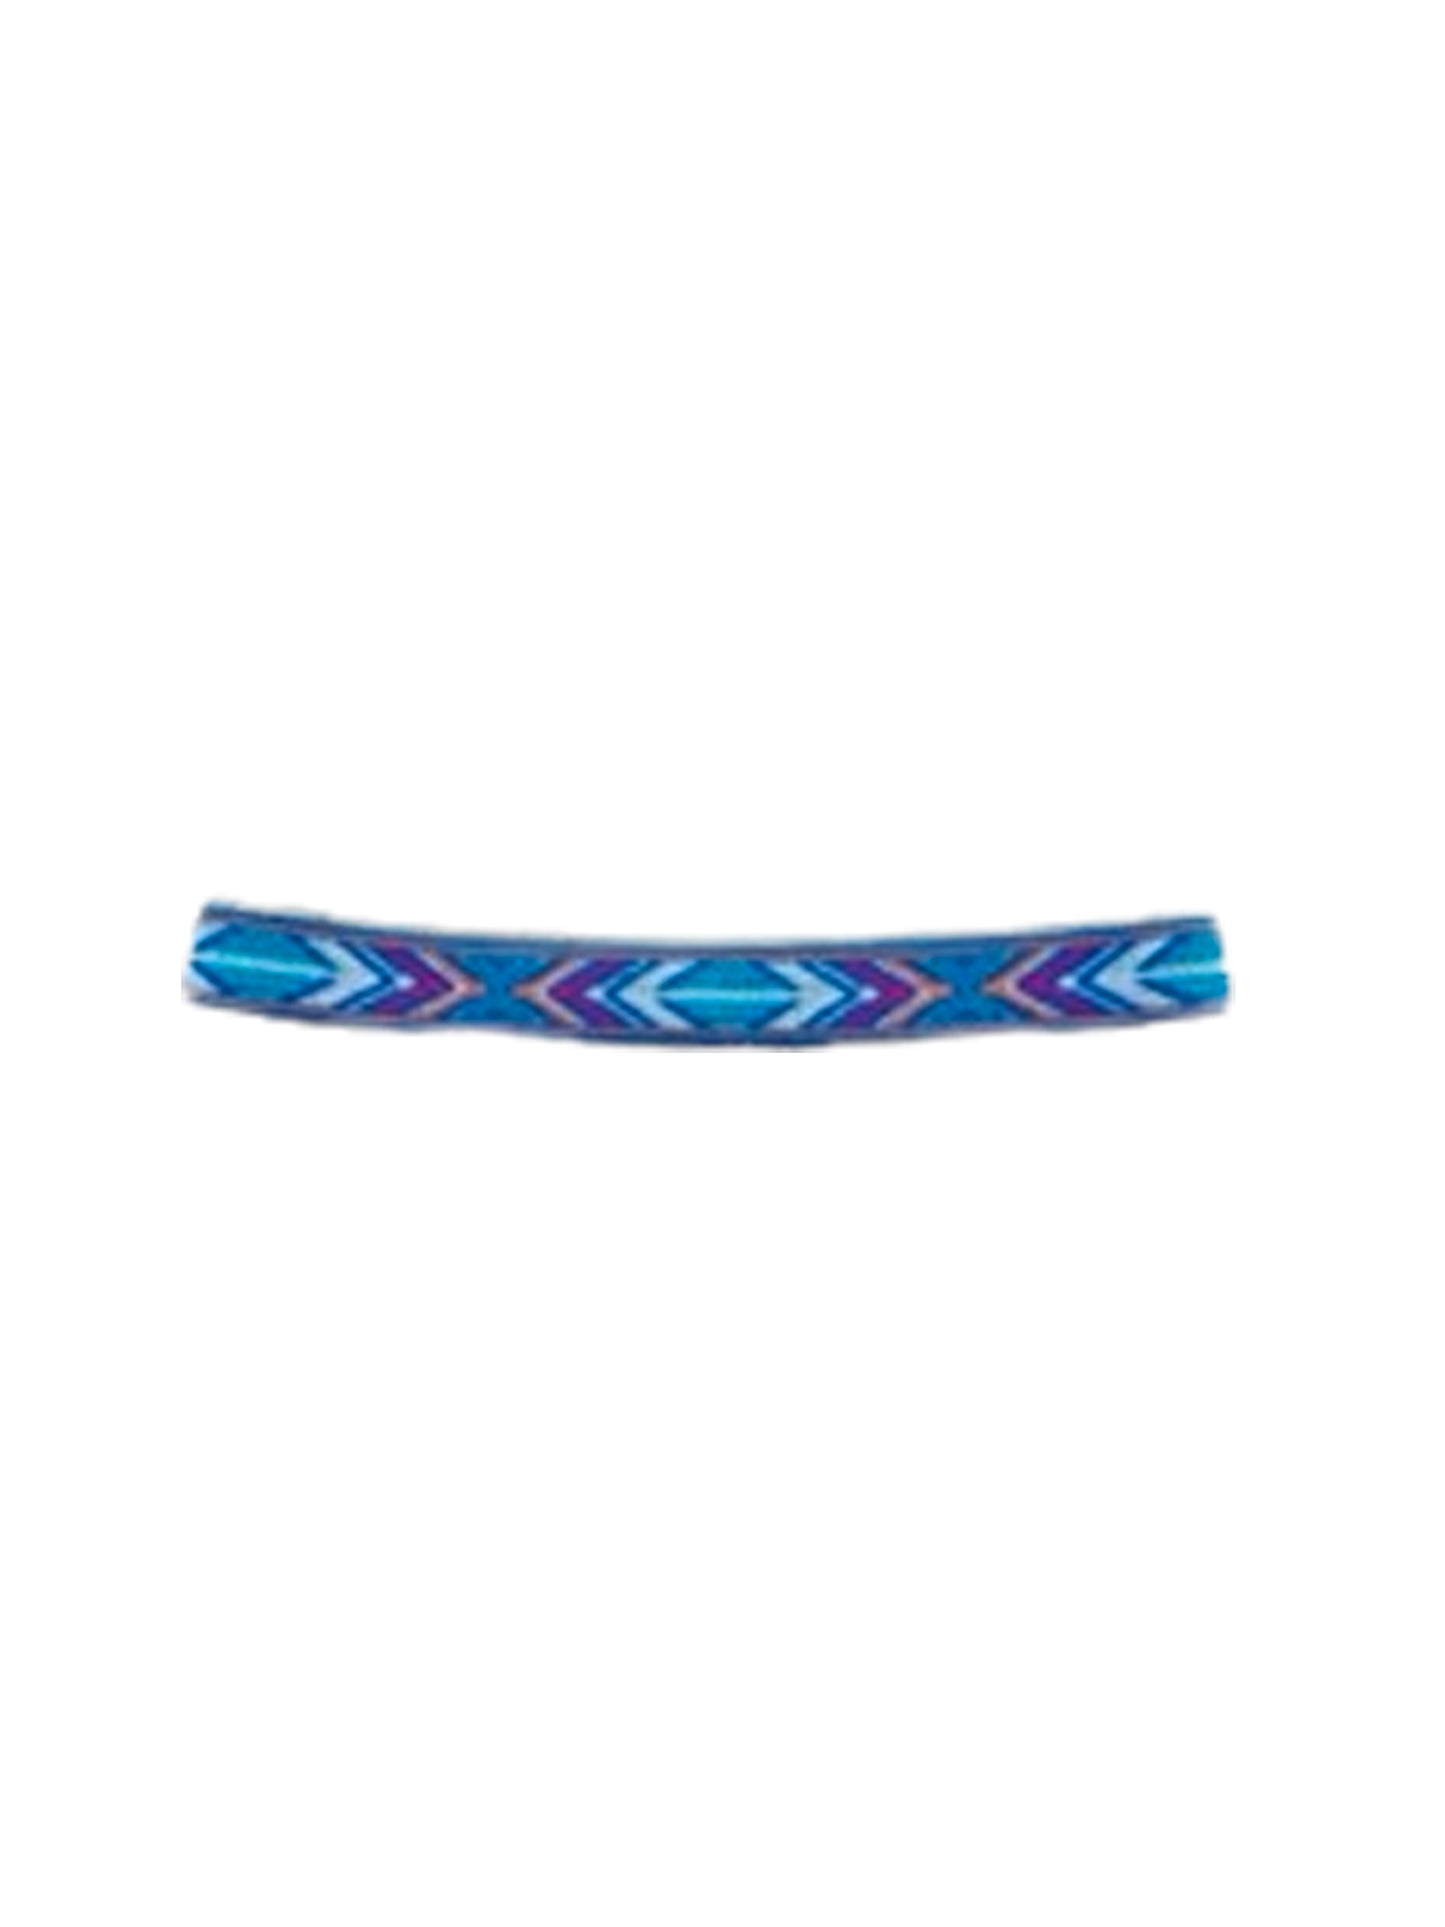 elastic hat band 1 inch royal blue tribal